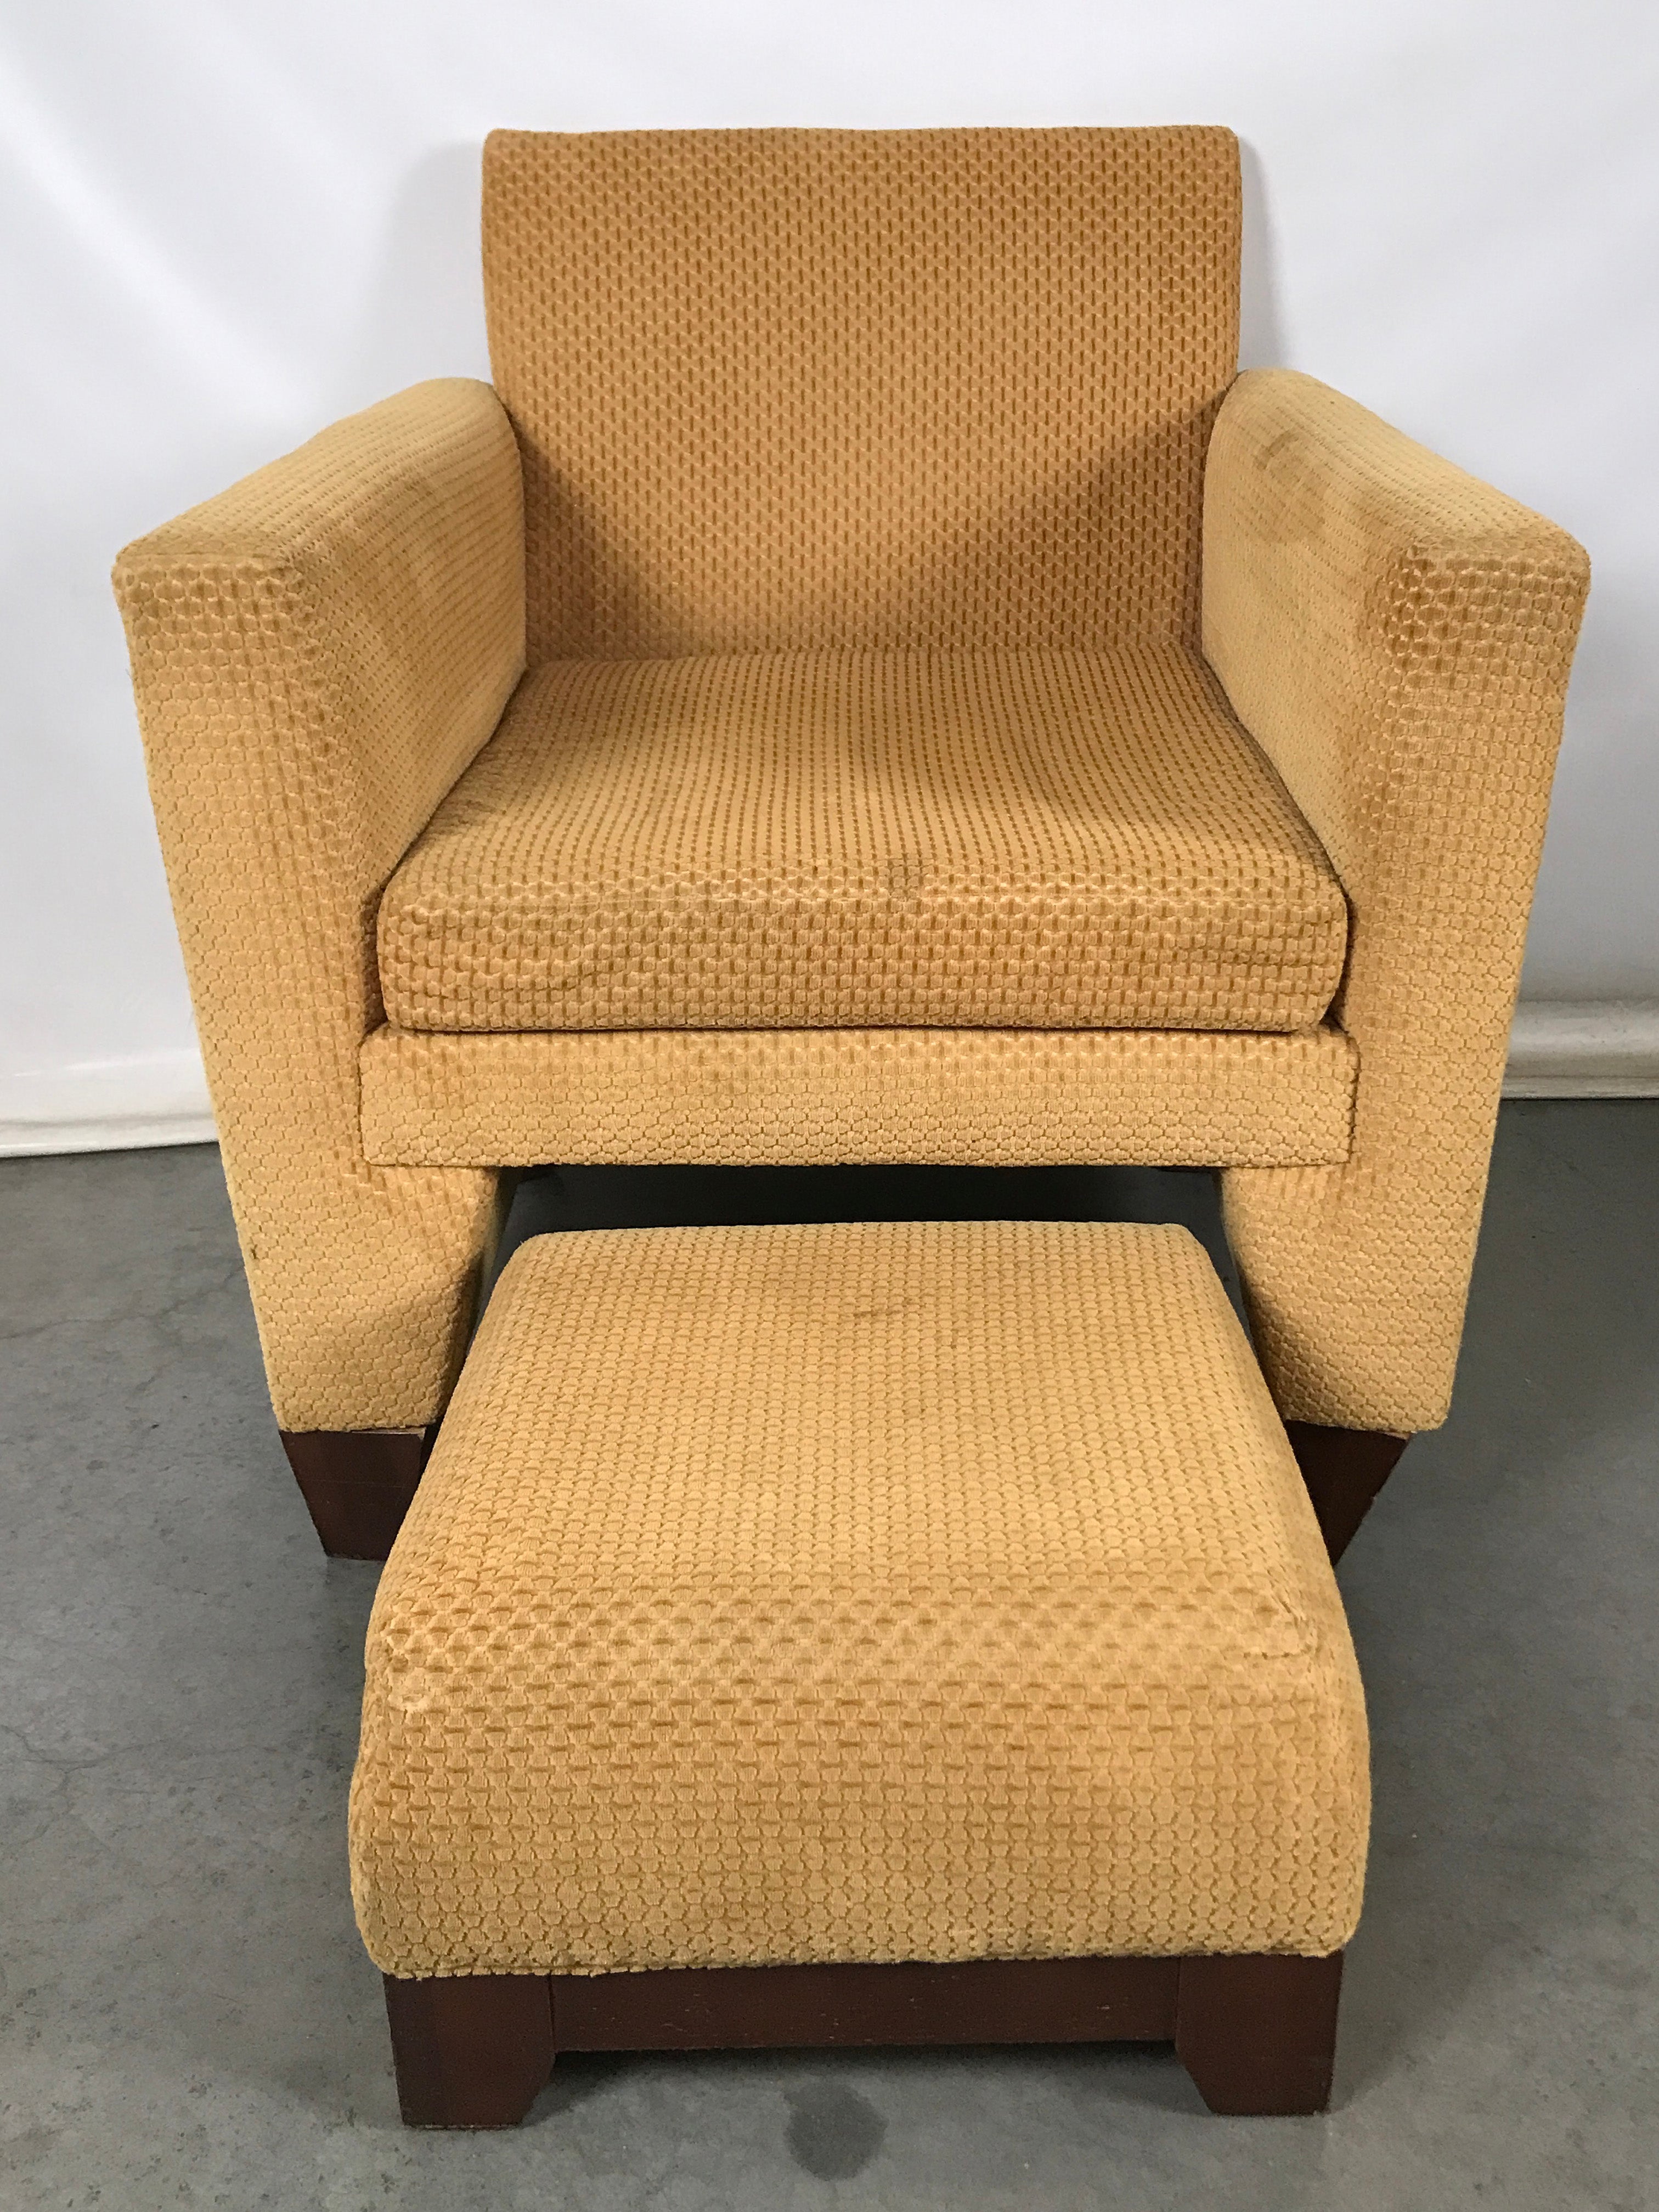 Kellex Seating Orange Chair With Ottoman